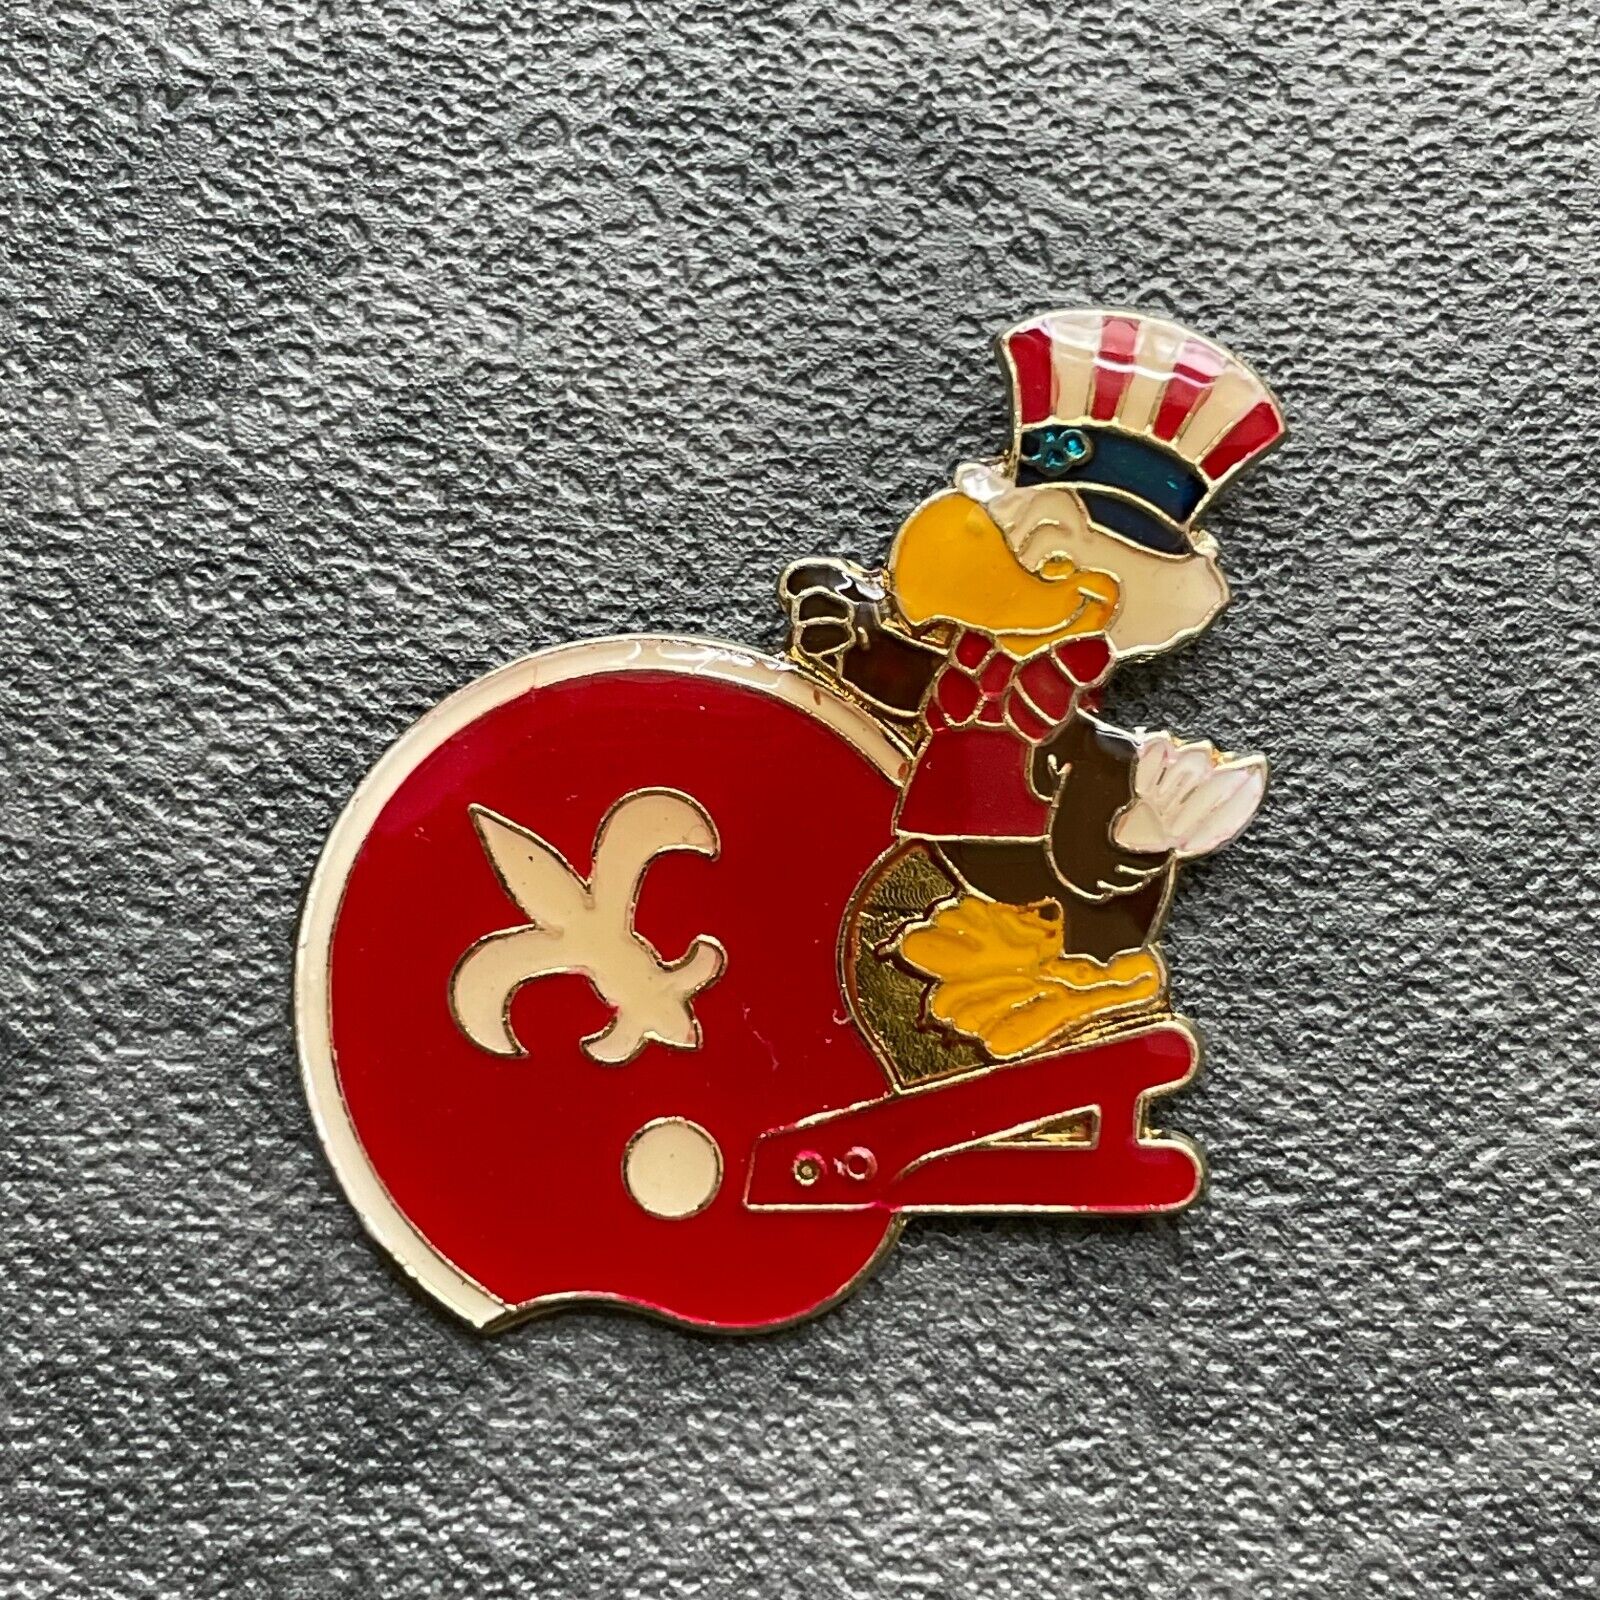 Rare VTG 1984 NFL Team Pins Featuring w/Sam the Eagle Olympic Mascot Football